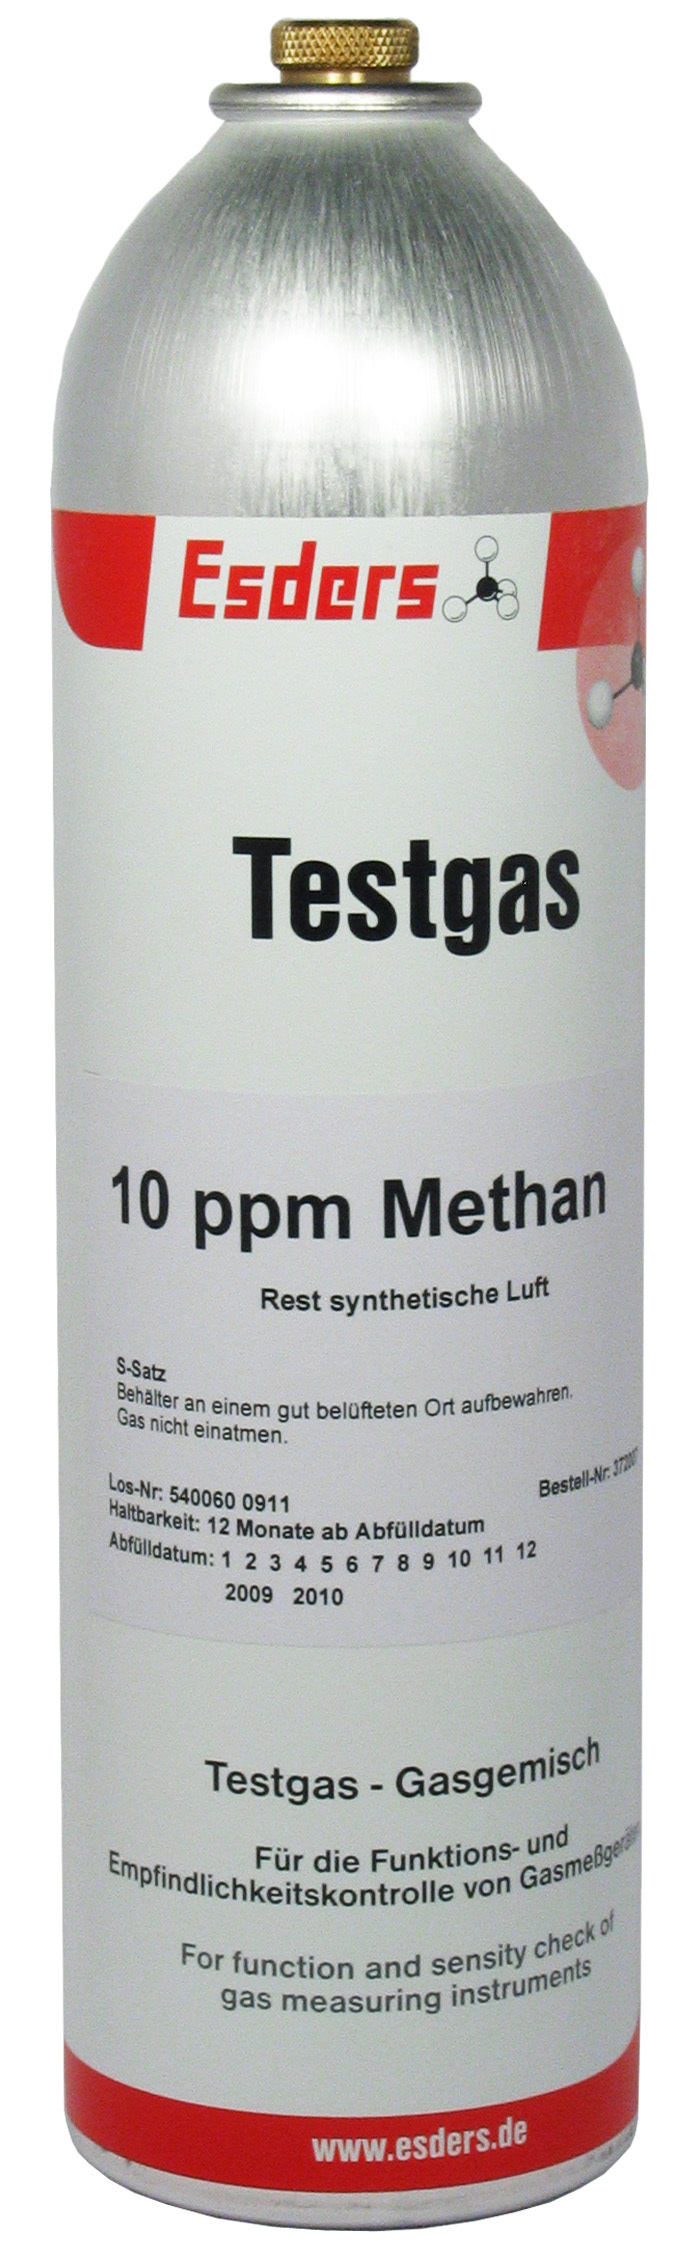 Test gas can 10 ppm methane 1 l - 12 bar